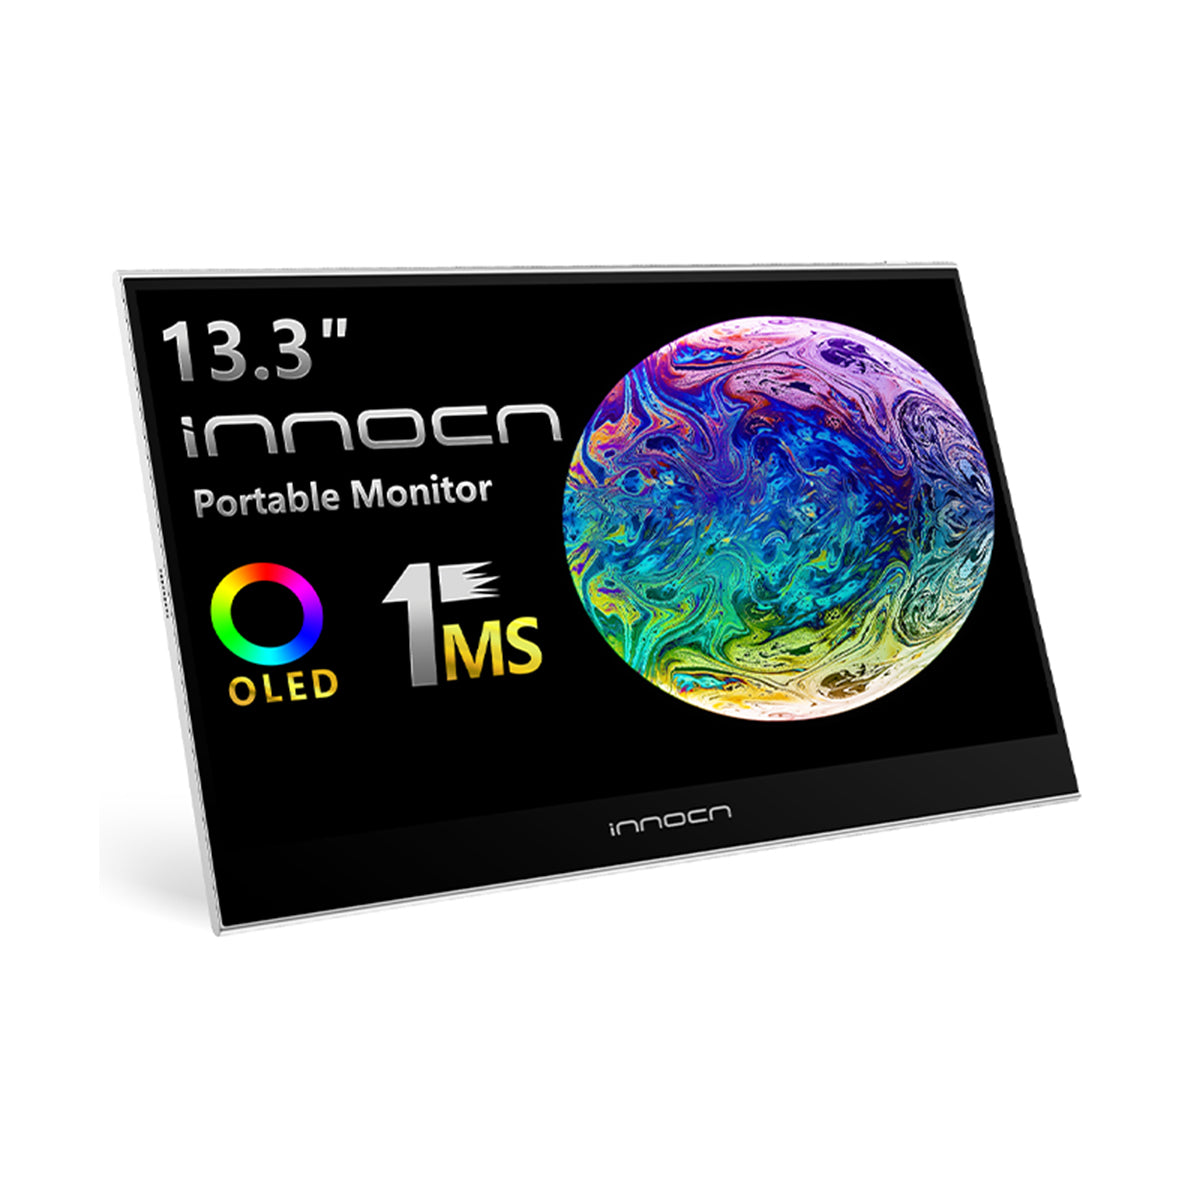 INNOCN 13.3 OLED FHD 1ms Portable Monitor - 13A1F